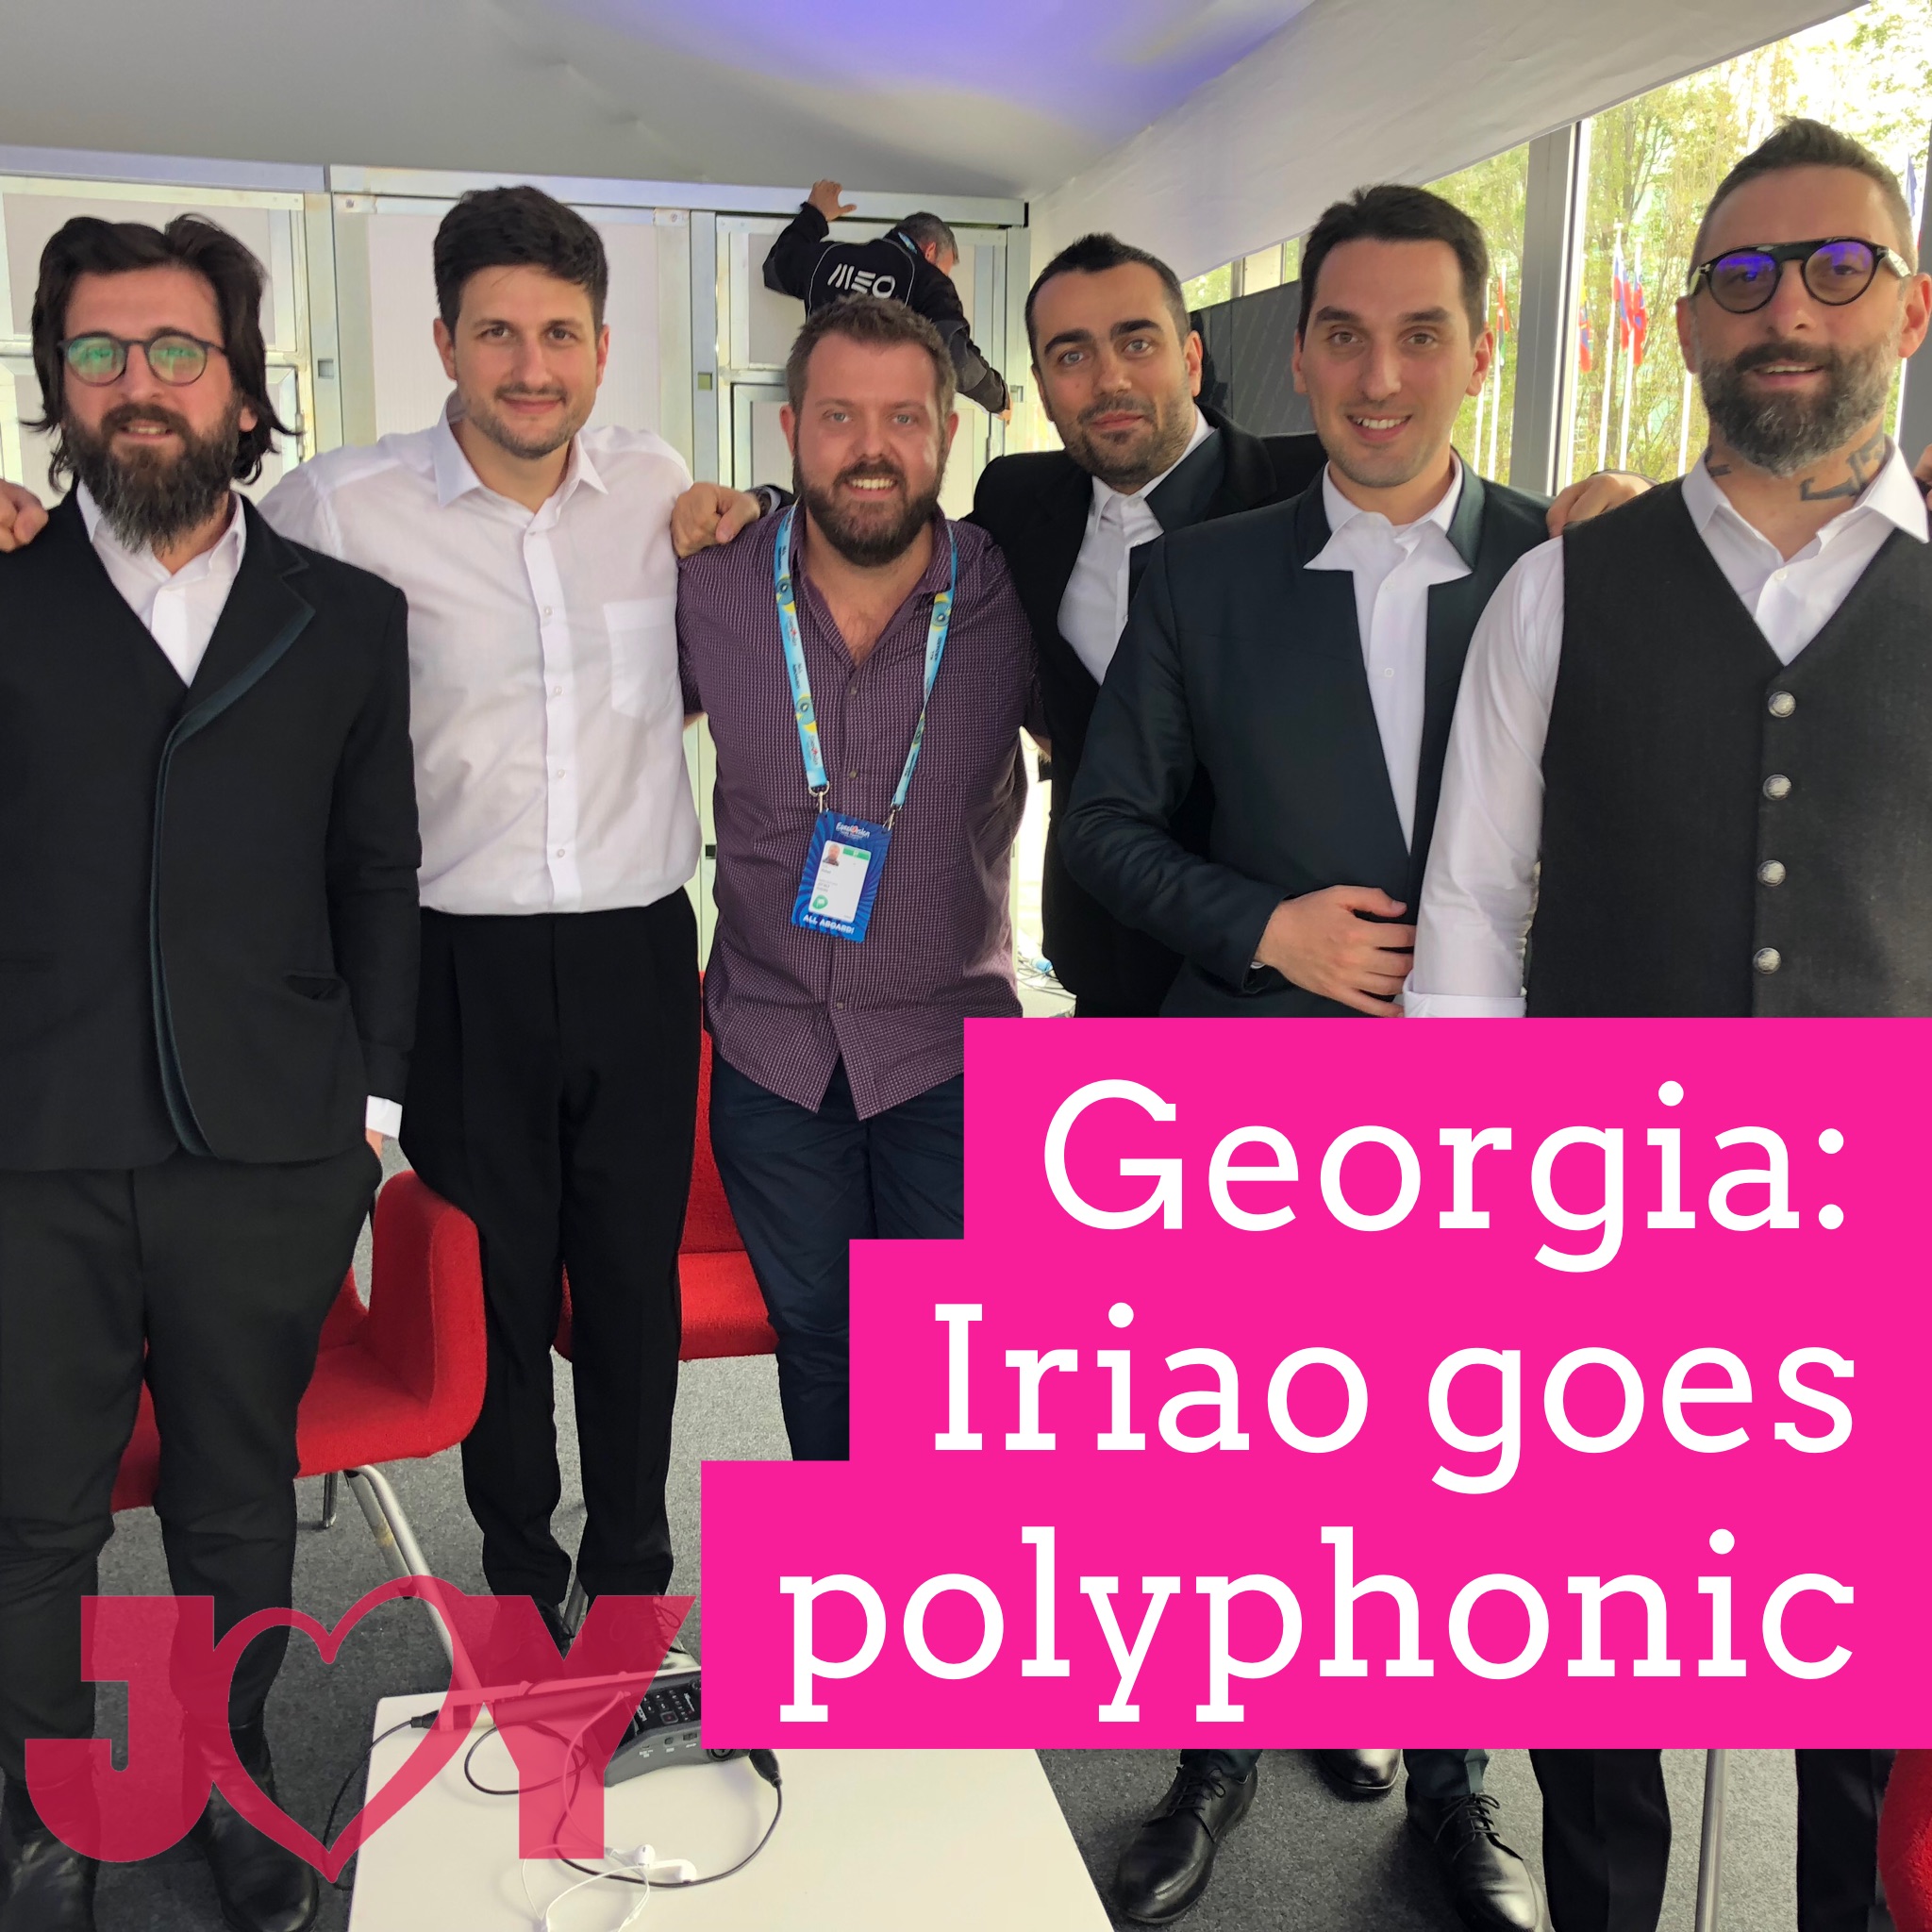 Georgia: Iriao goes polyphonic